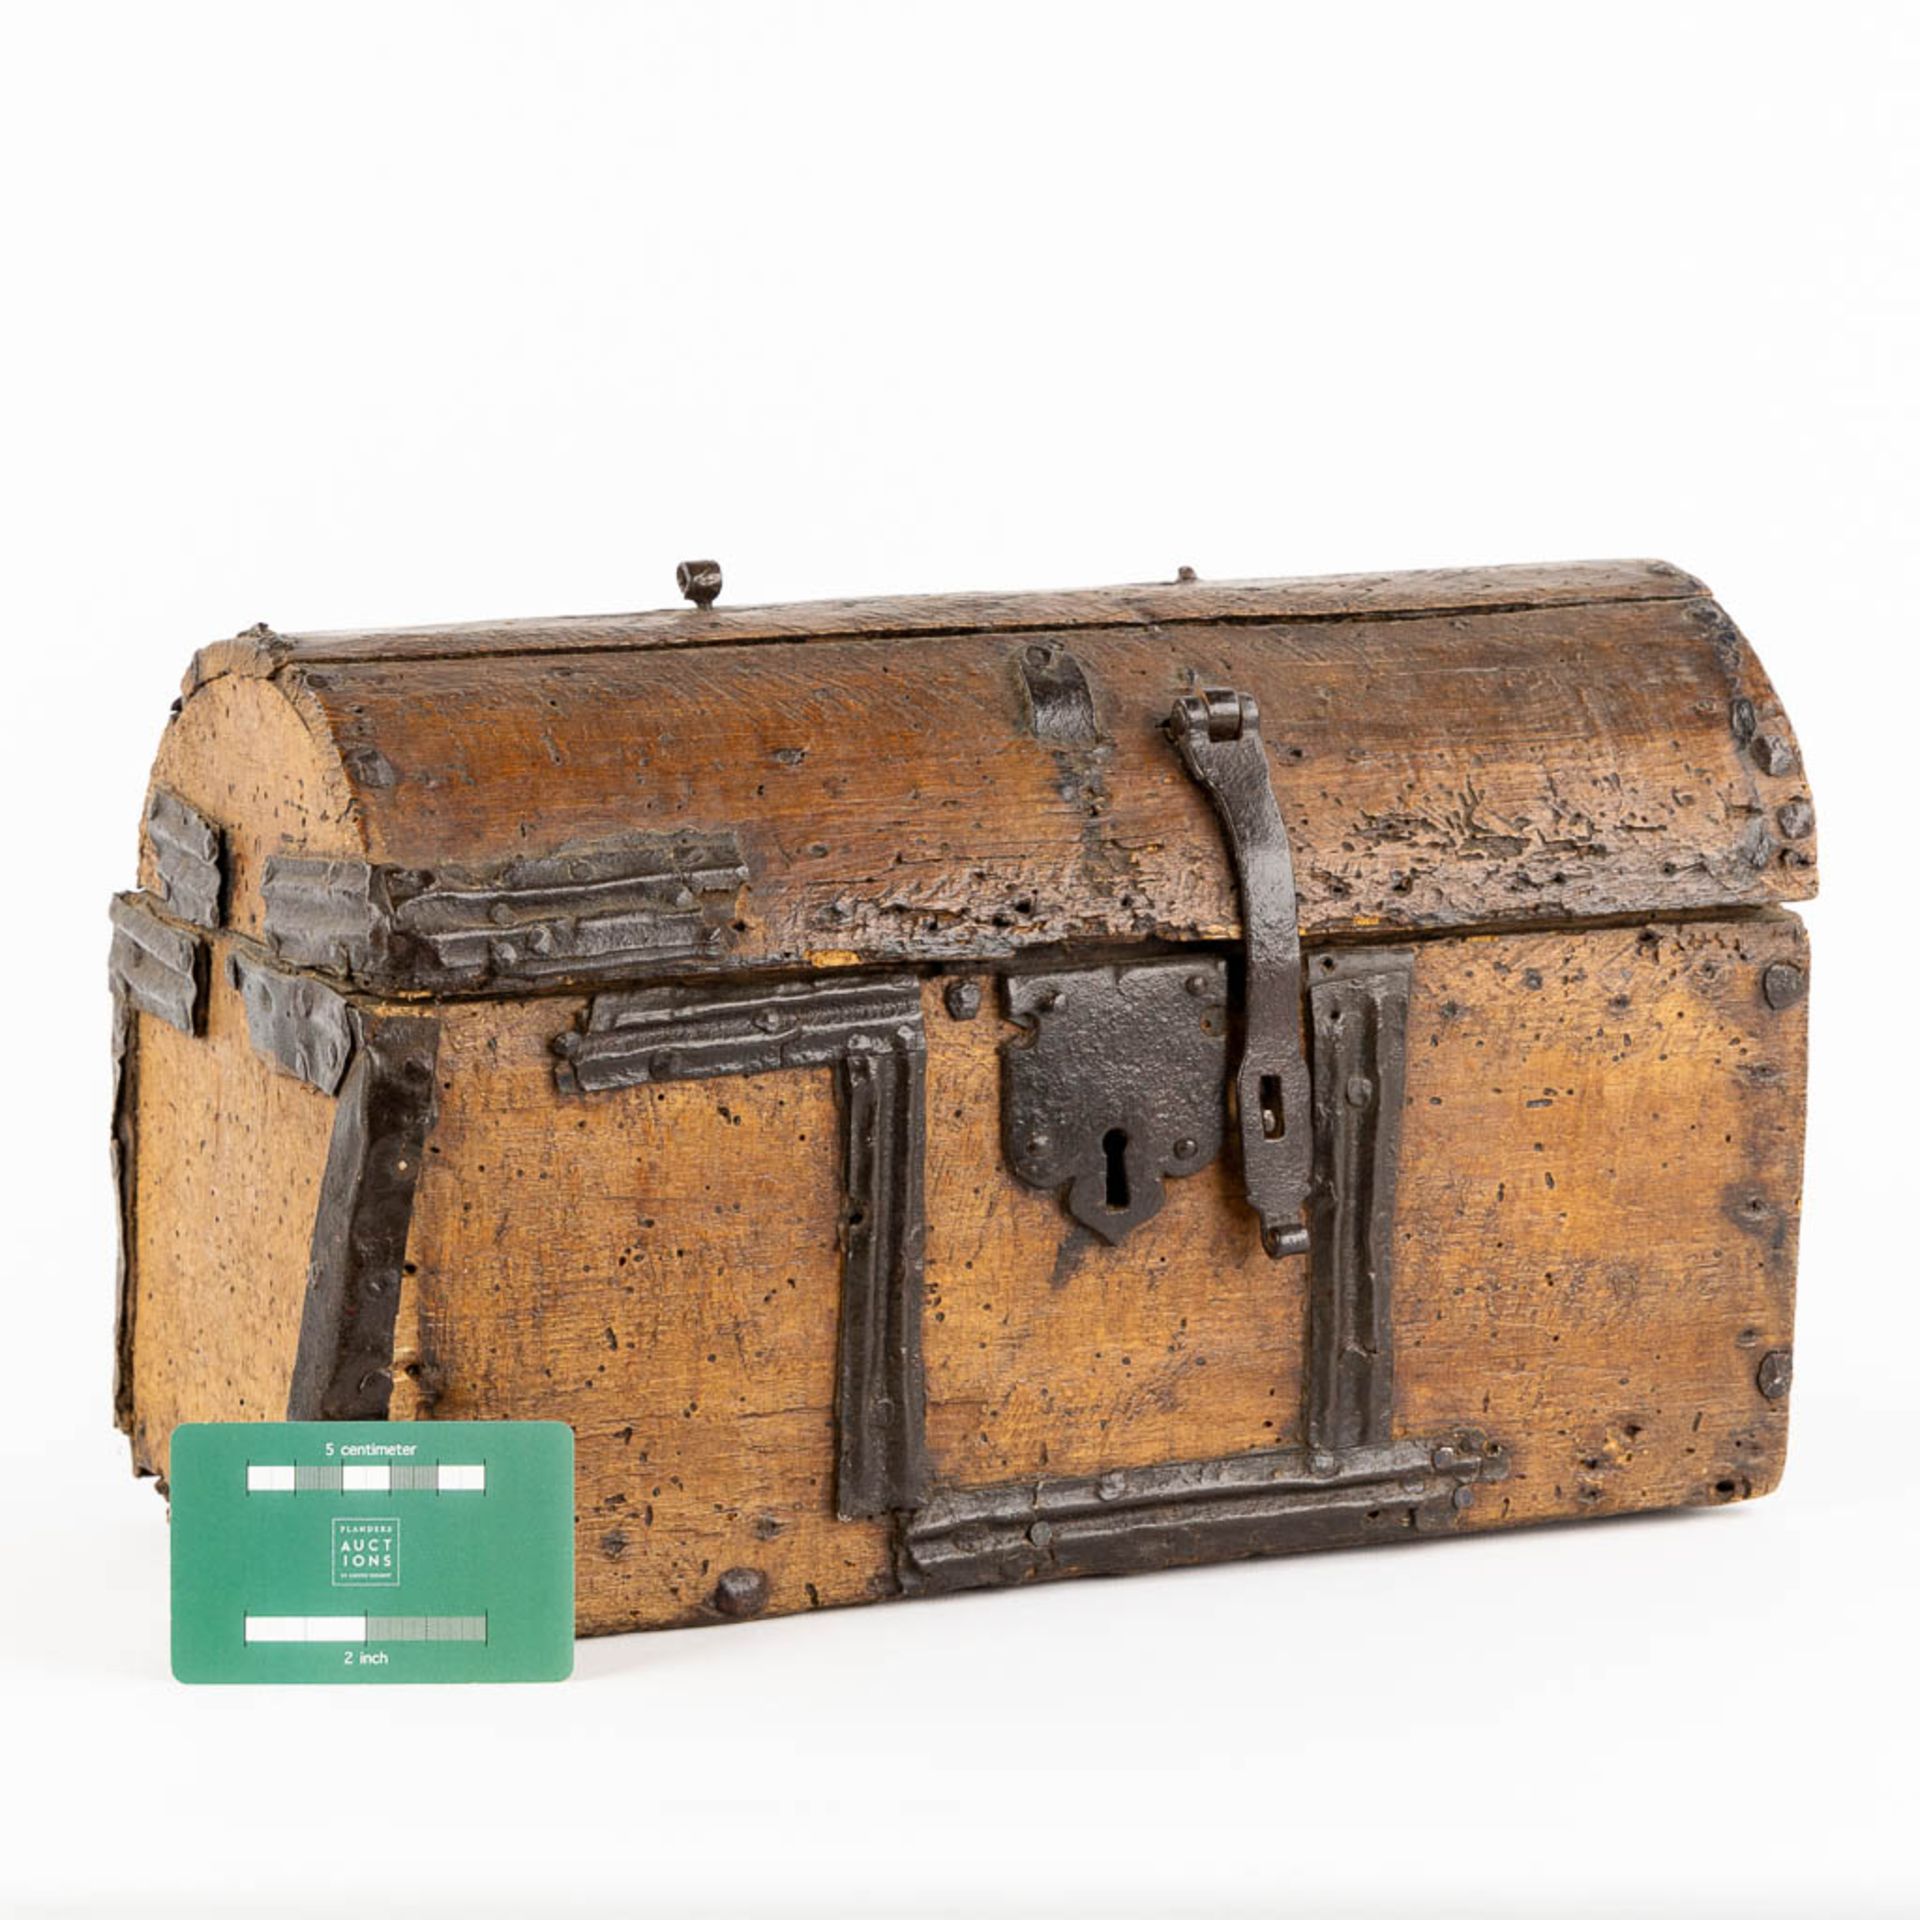 An antique money box or storage chest, wood and wrought iron, 16th/17th C. (L:20 x W:36 x H:22 cm) - Bild 2 aus 14